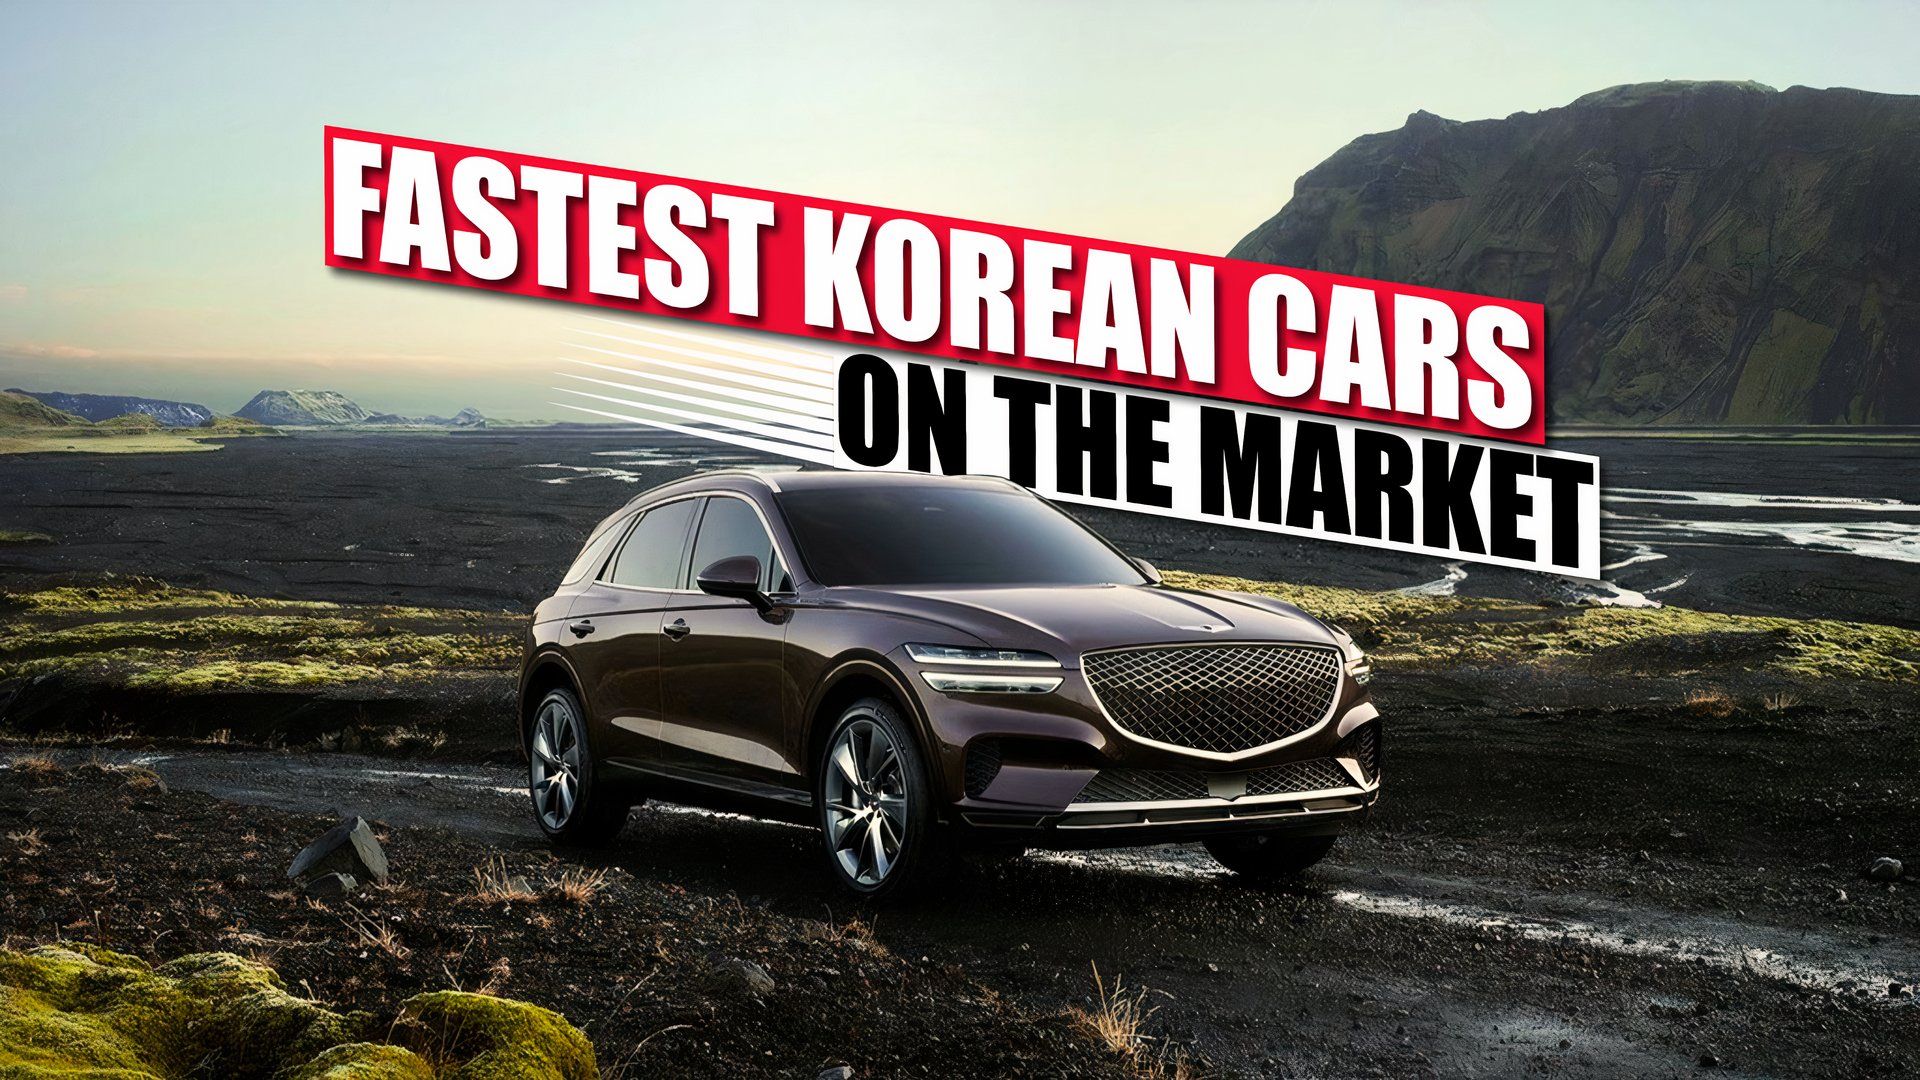 FAST-KOREAN-CARS